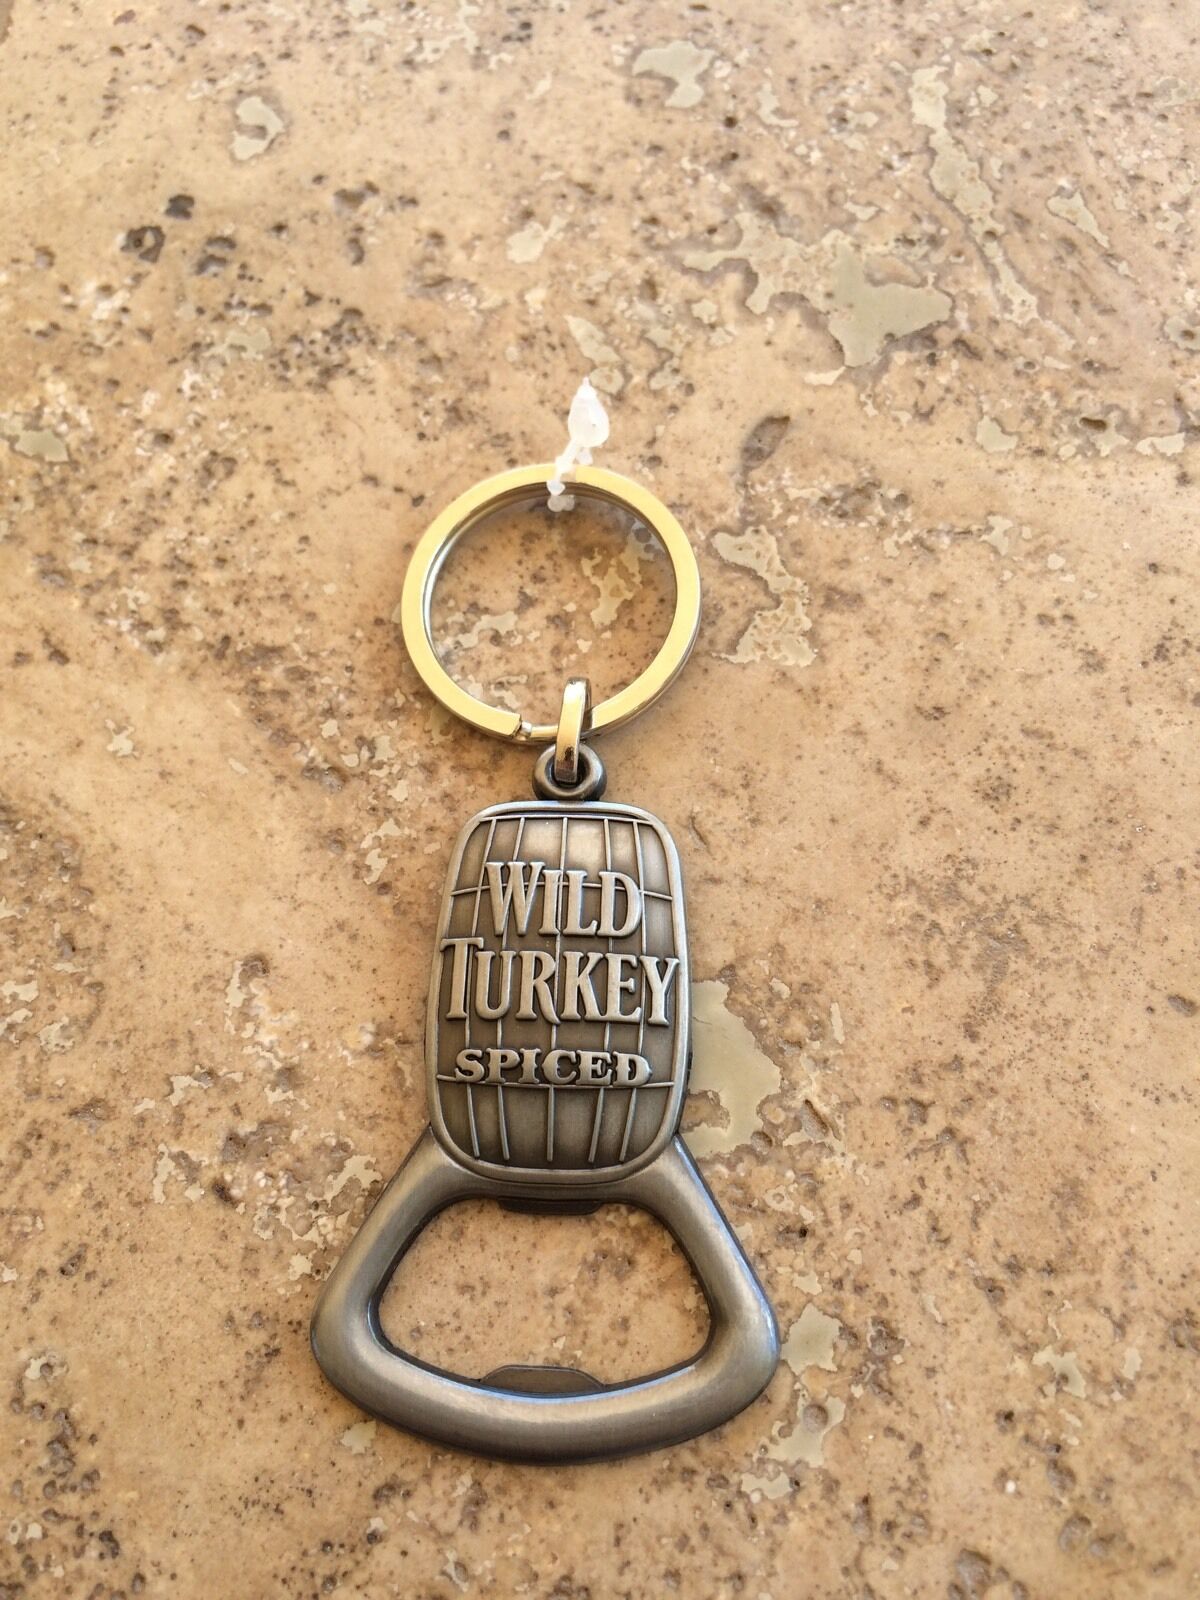 Wild Turkey Spiced Whiskey Key Chain Bottle Opener Brand New!